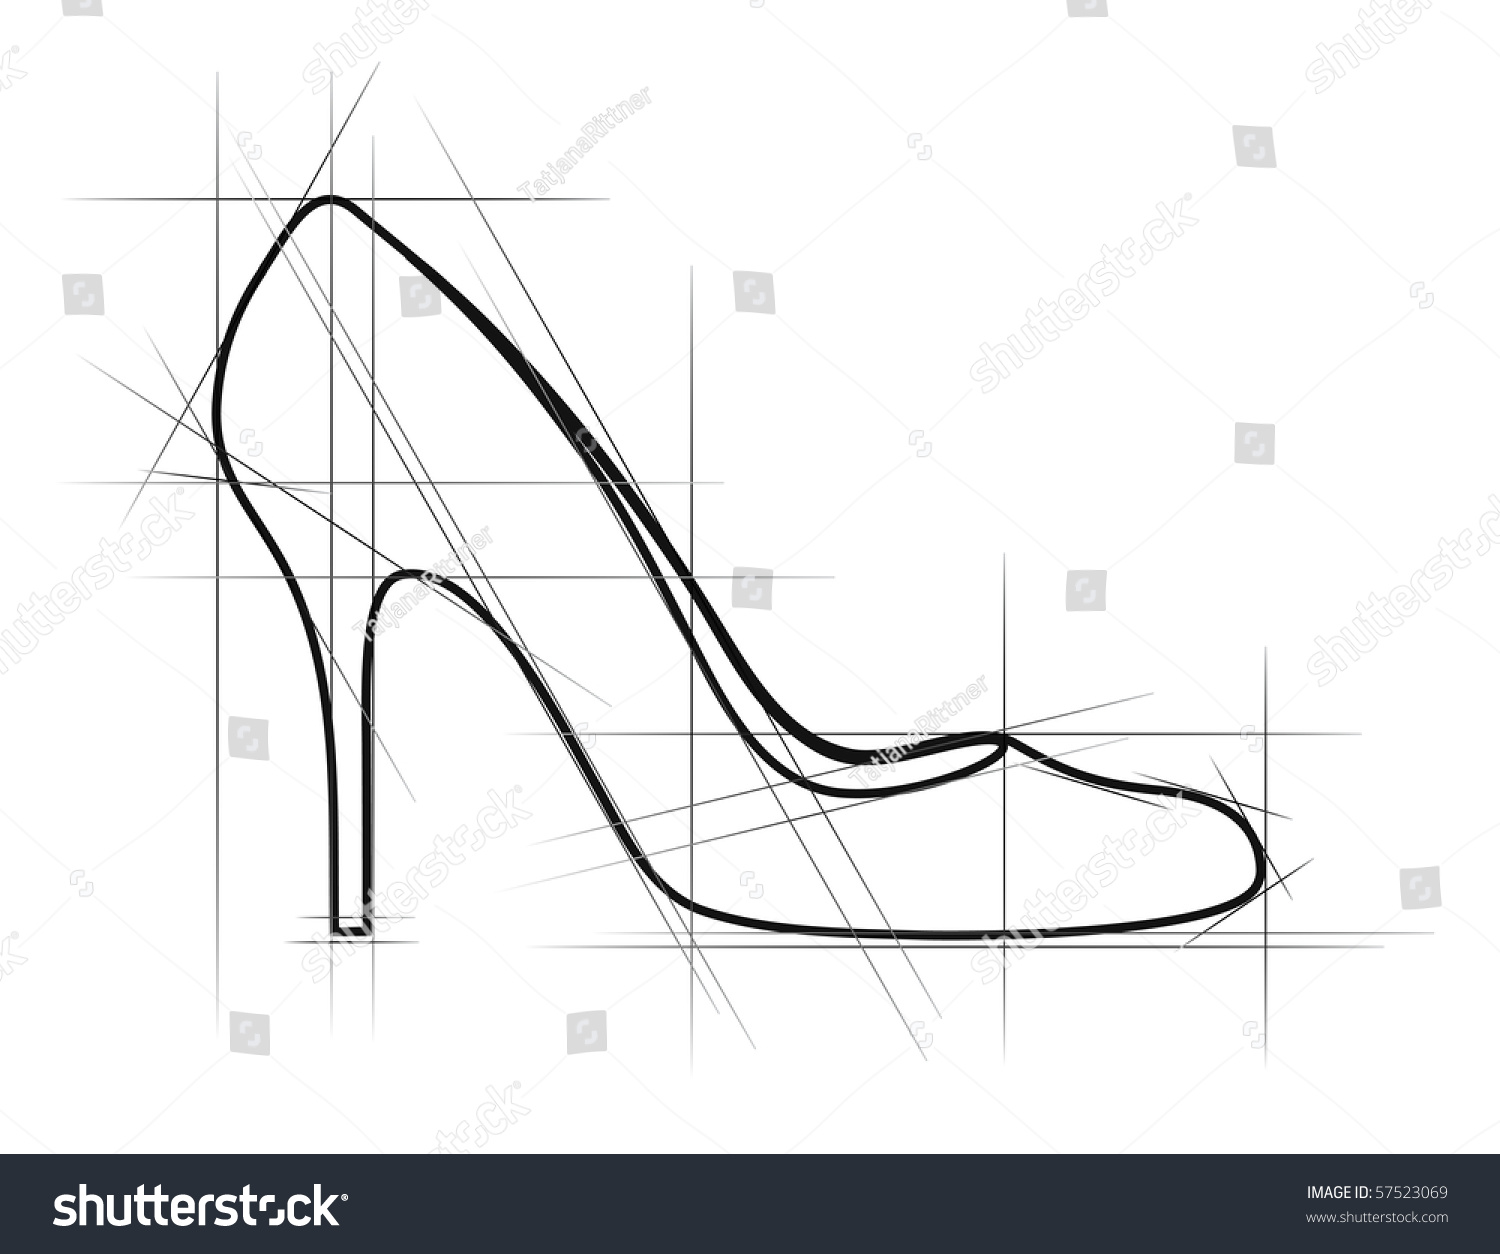 Sketch Of Women Shoe. Vector-Illustration - 57523069 : Shutterstock